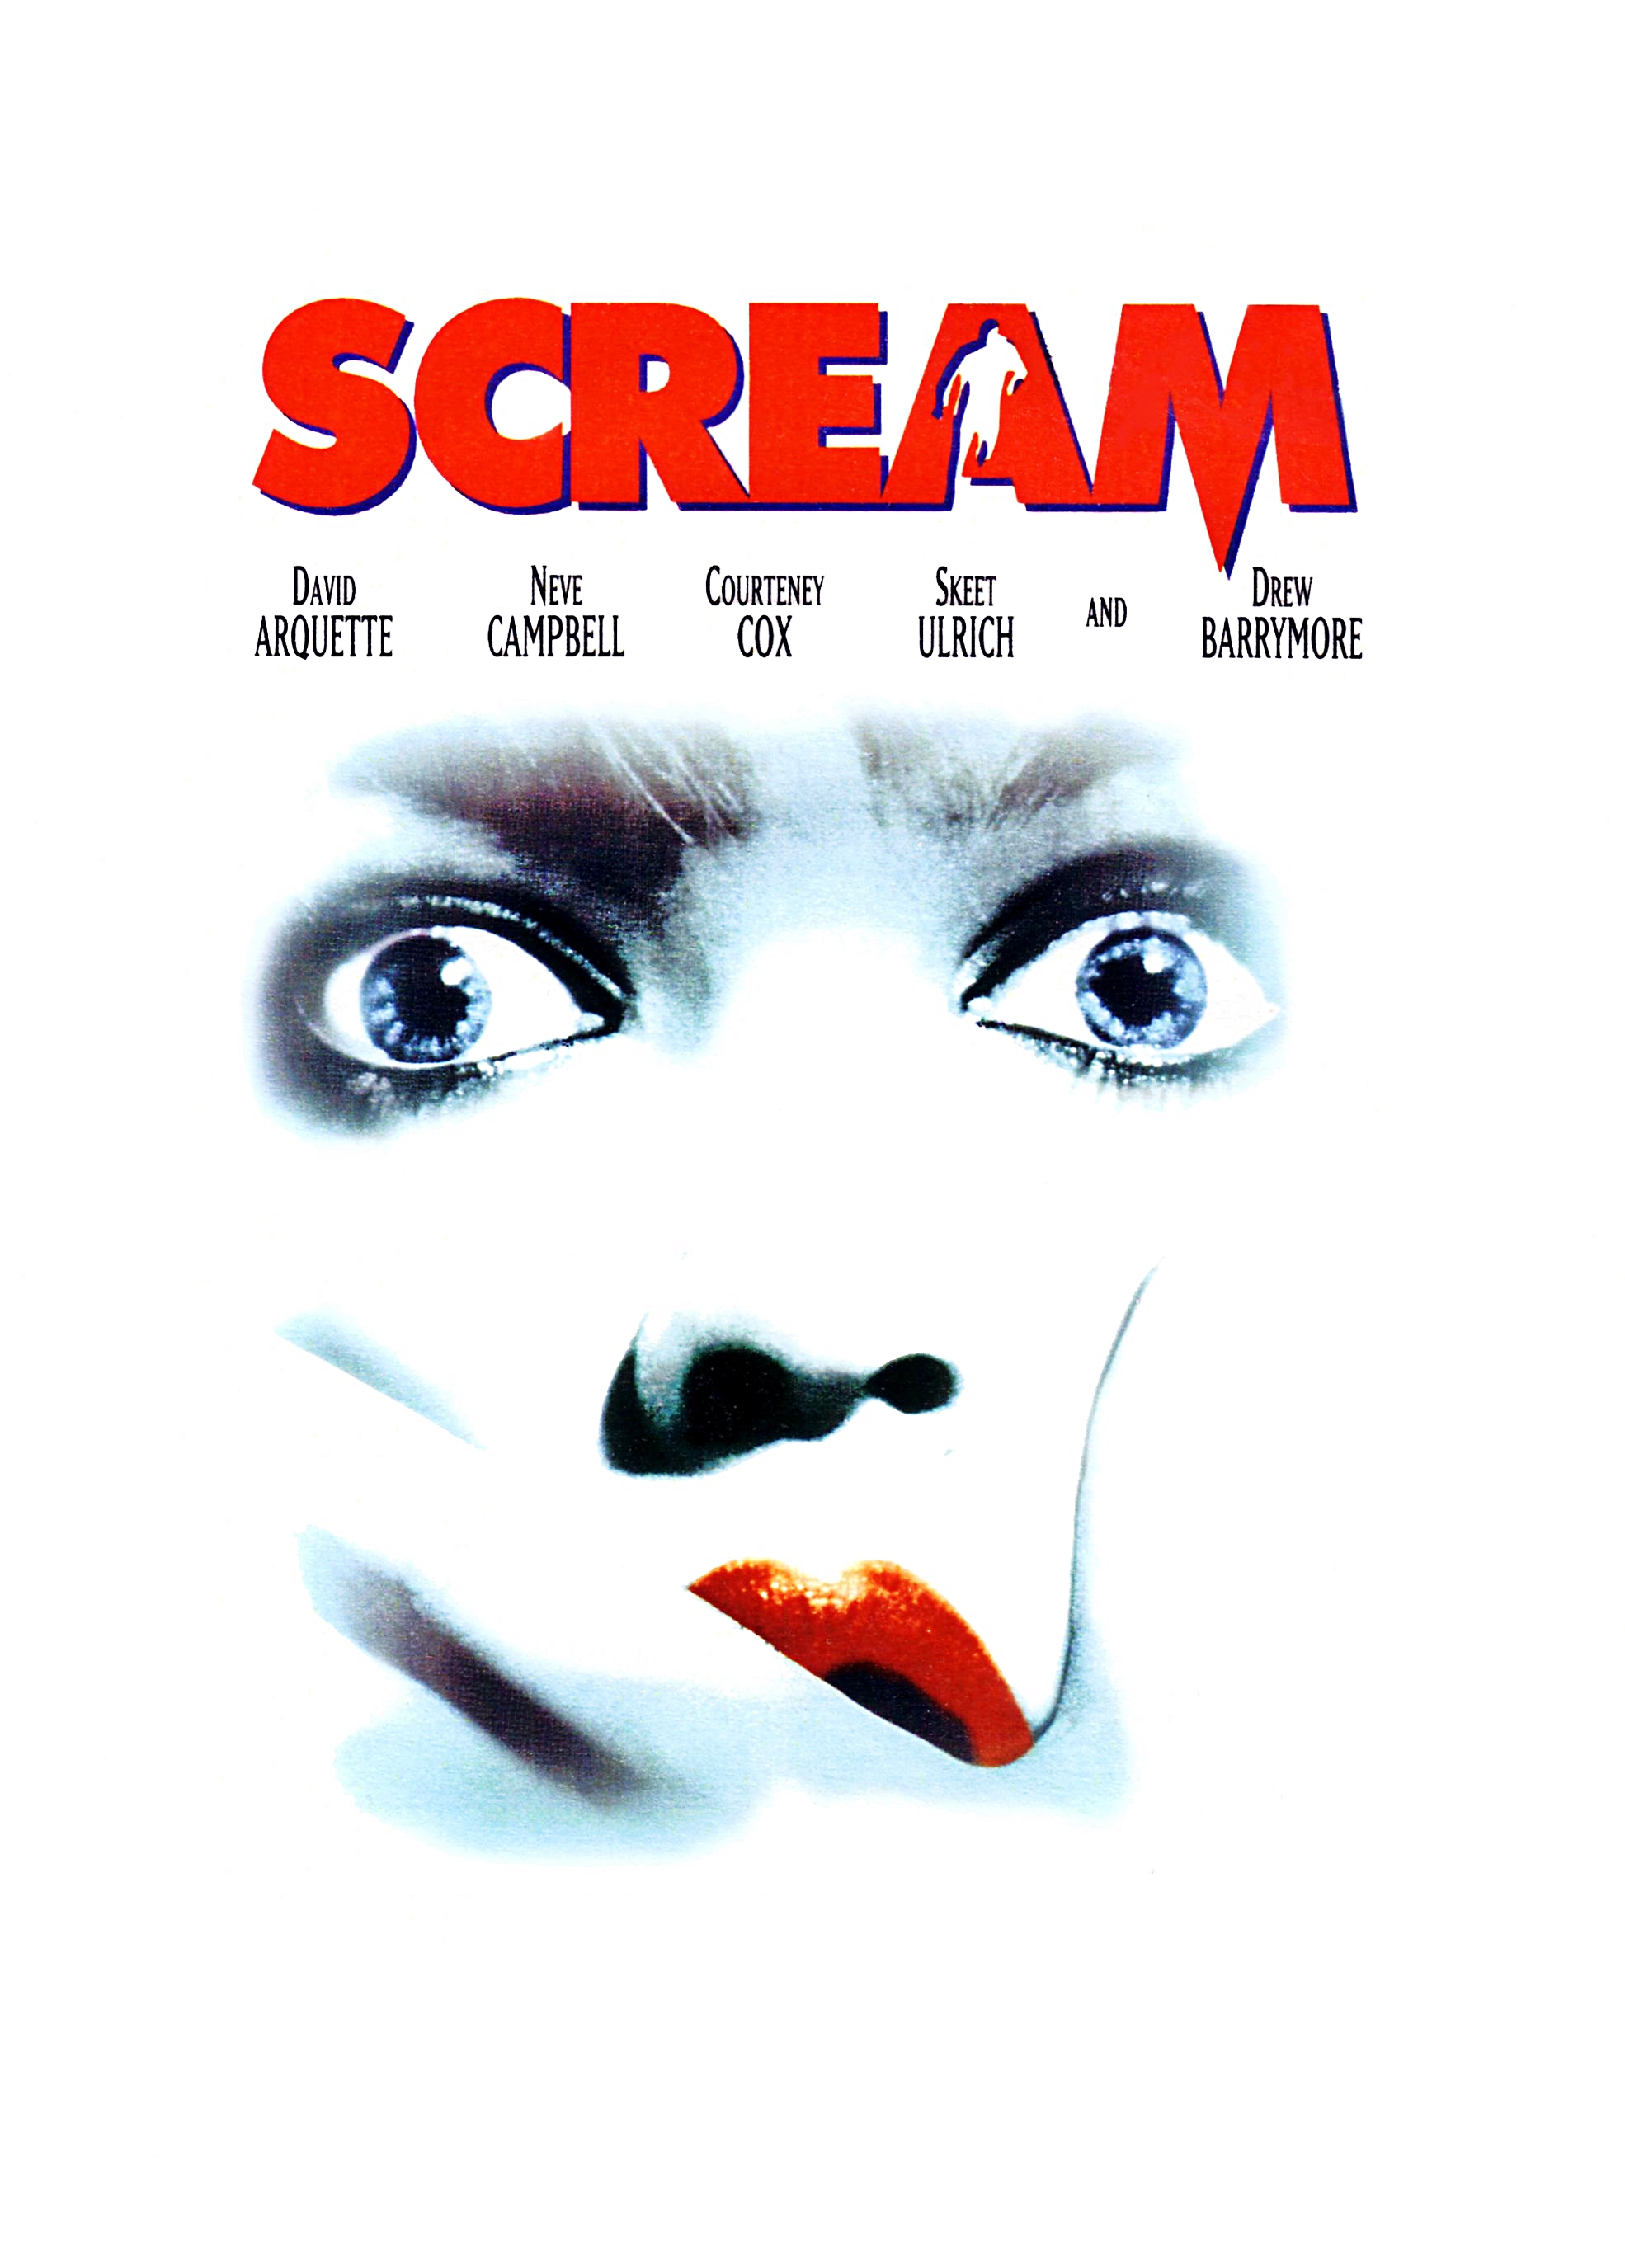 Scream-Poster-scream-34863253-1970-2750.jpg